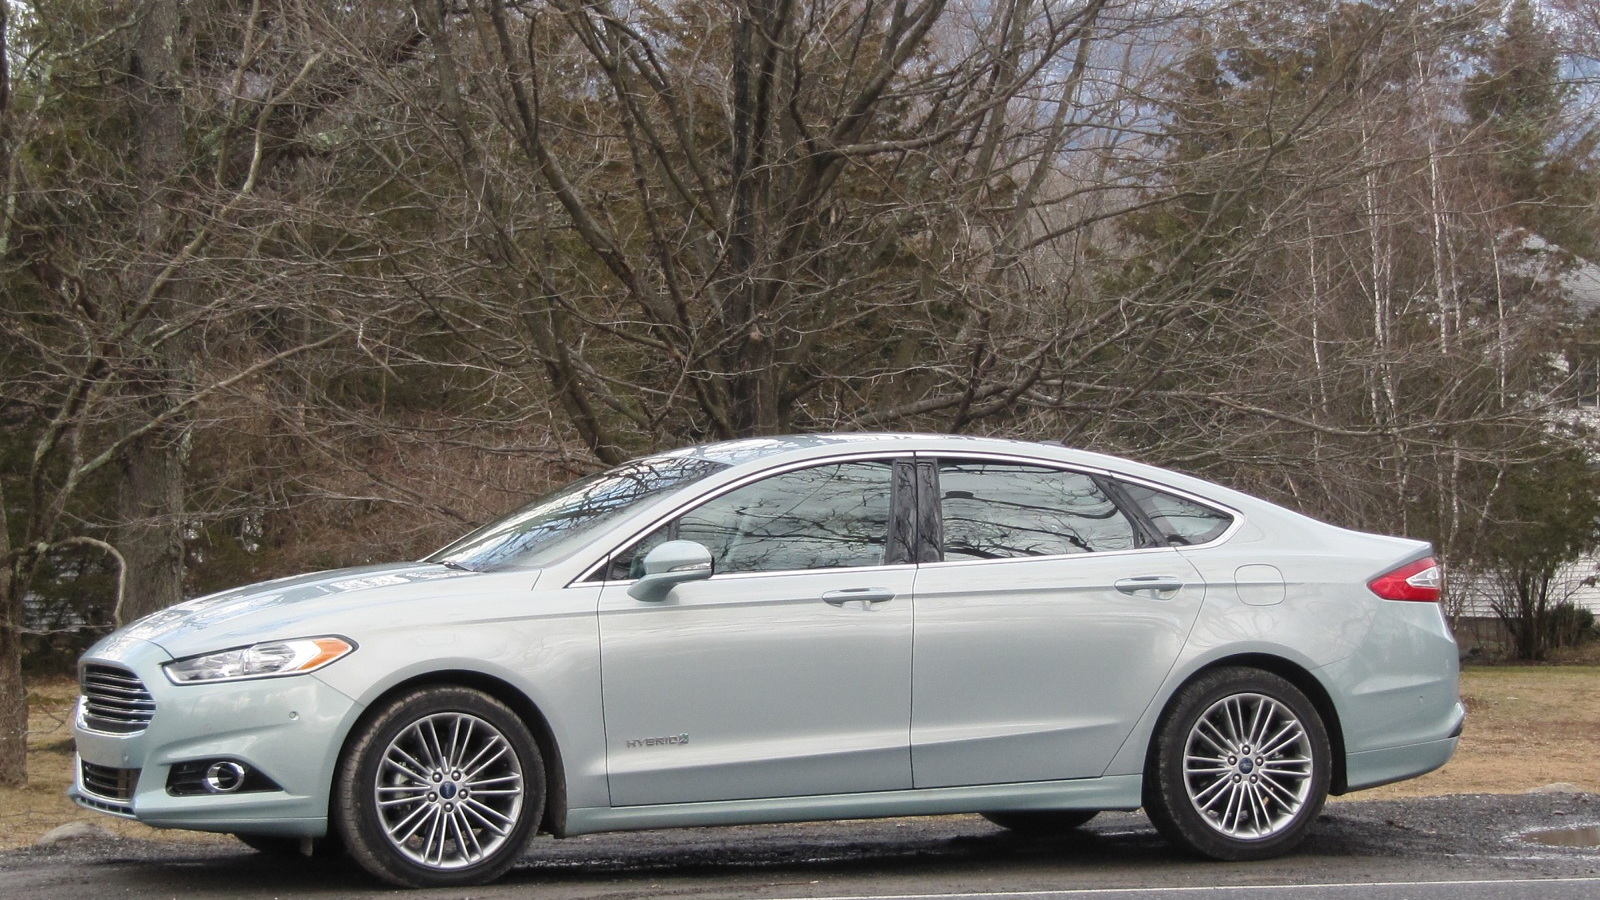 2013 Ford Fusion Hybrid, test drive, Catskill Mountains, NY, Mar 2013